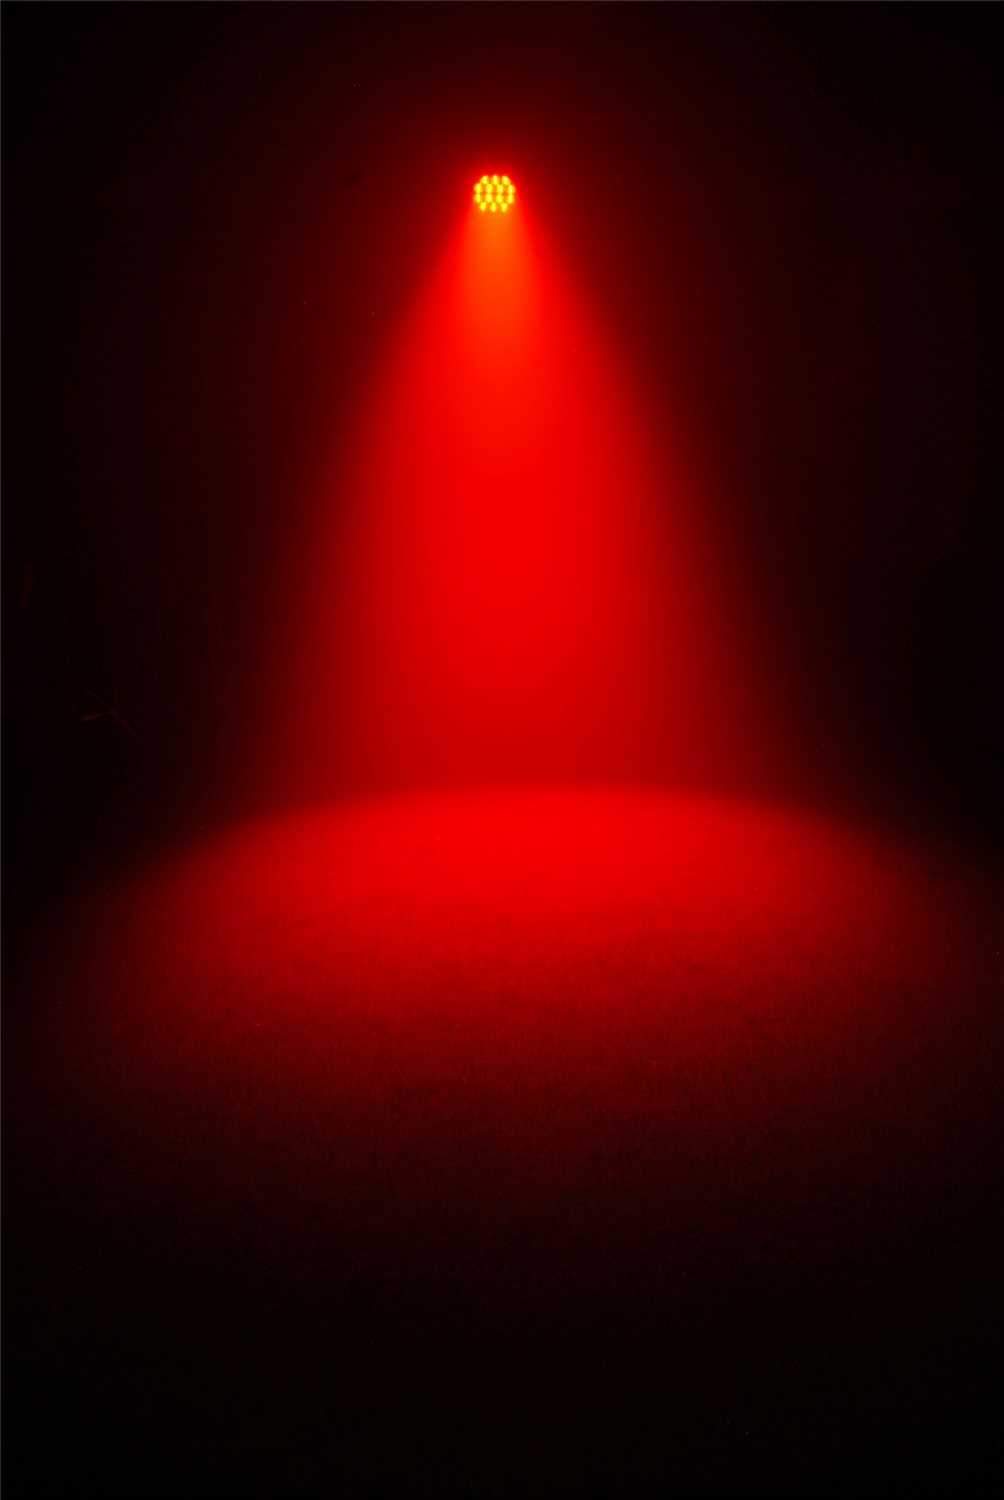 Chauvet COLORado 2 Quad Zoom Tour 15W LED - ProSound and Stage Lighting